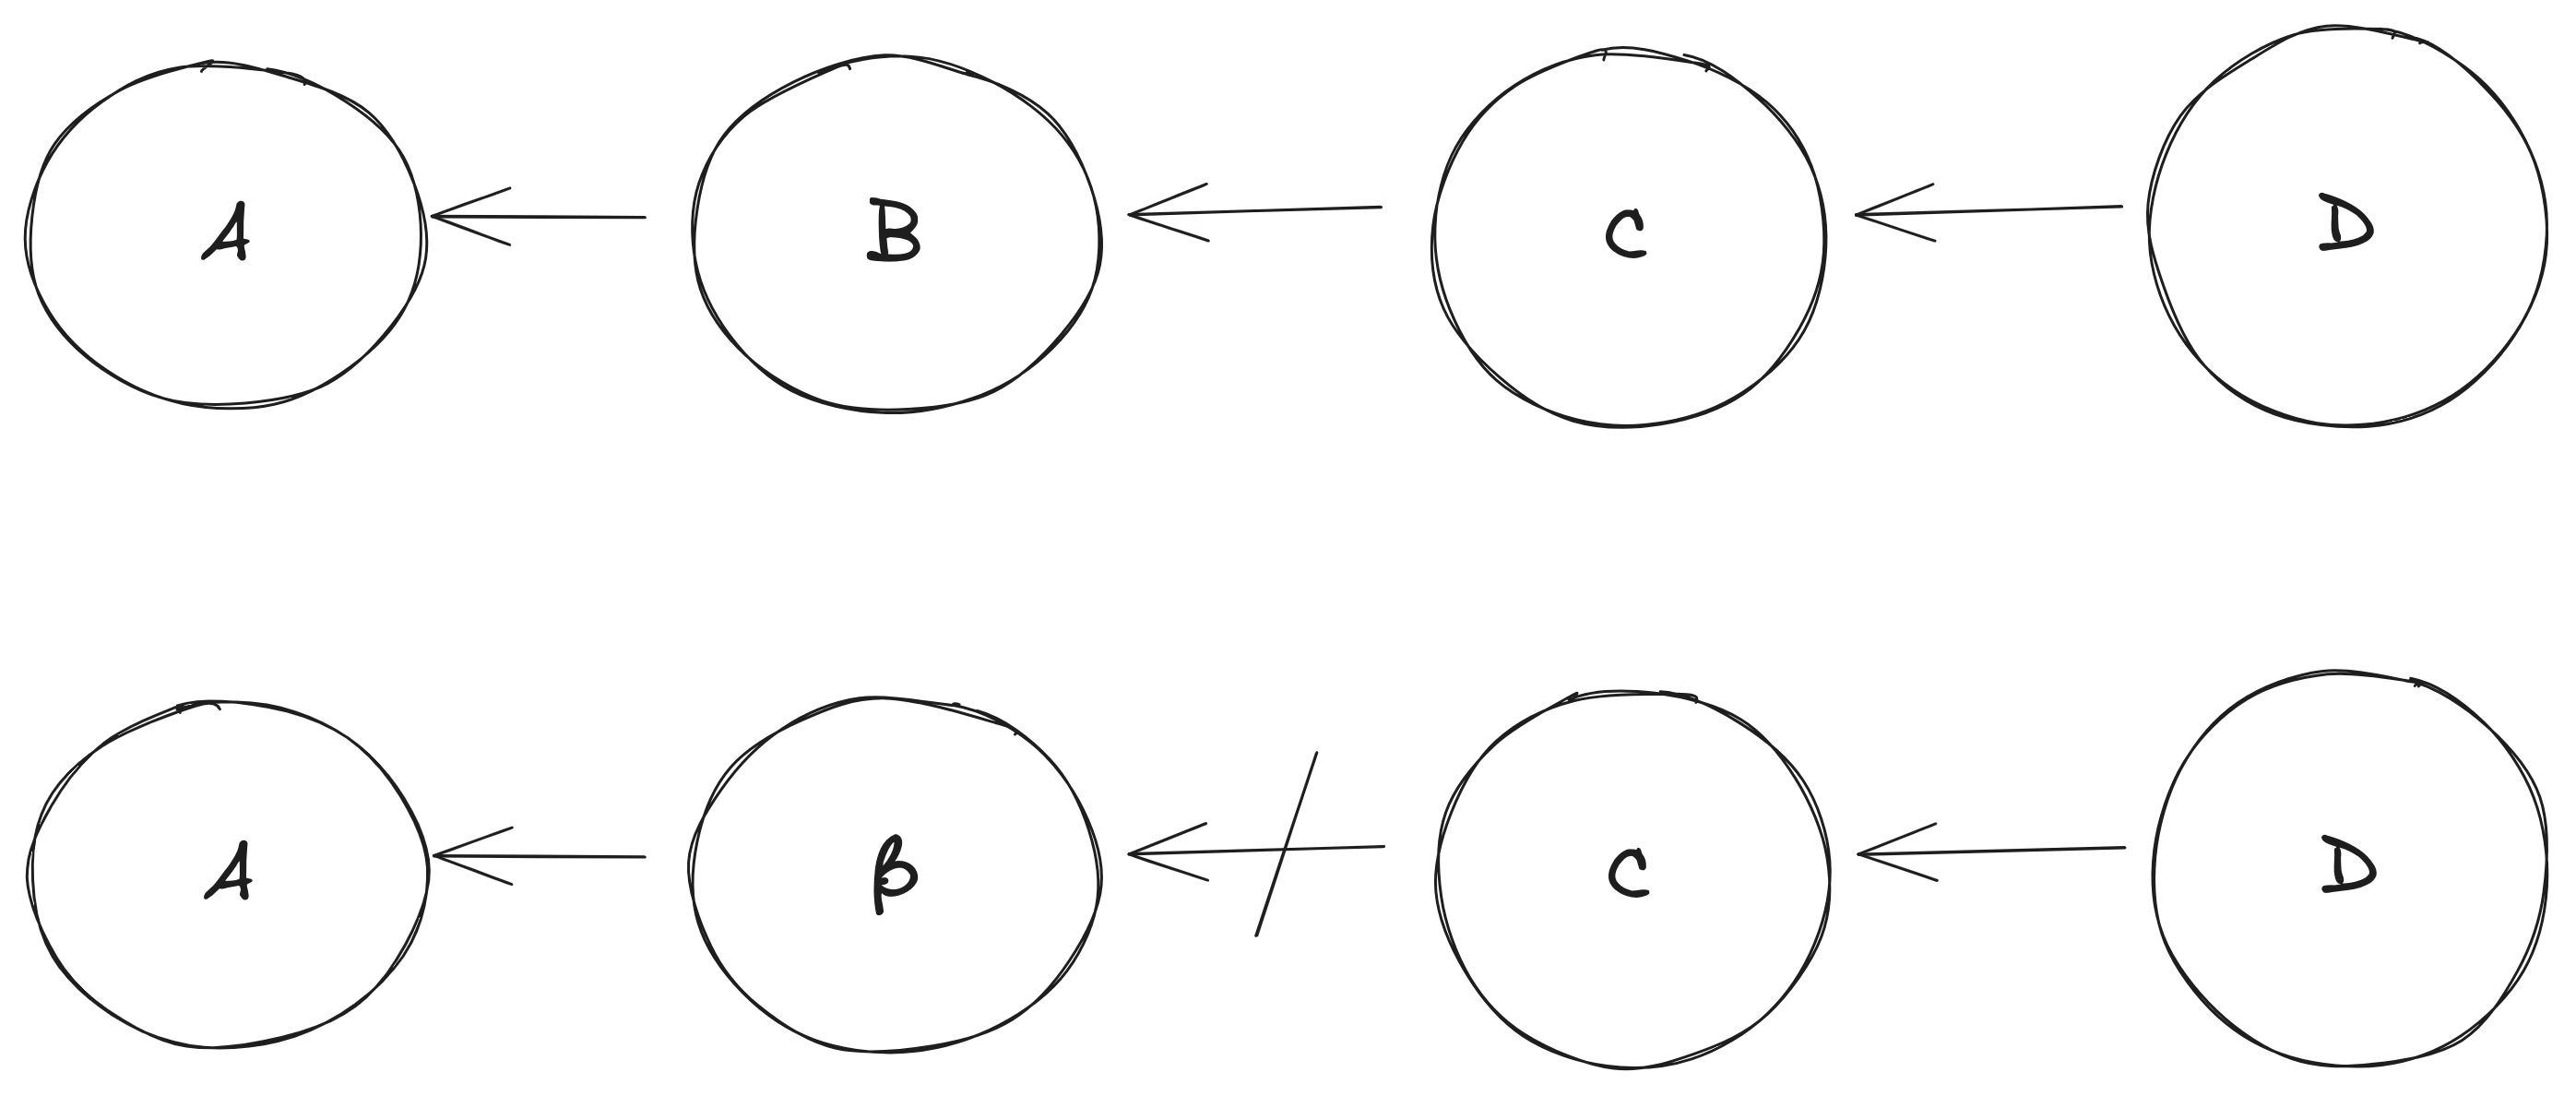 Diagram illustrating blockchain